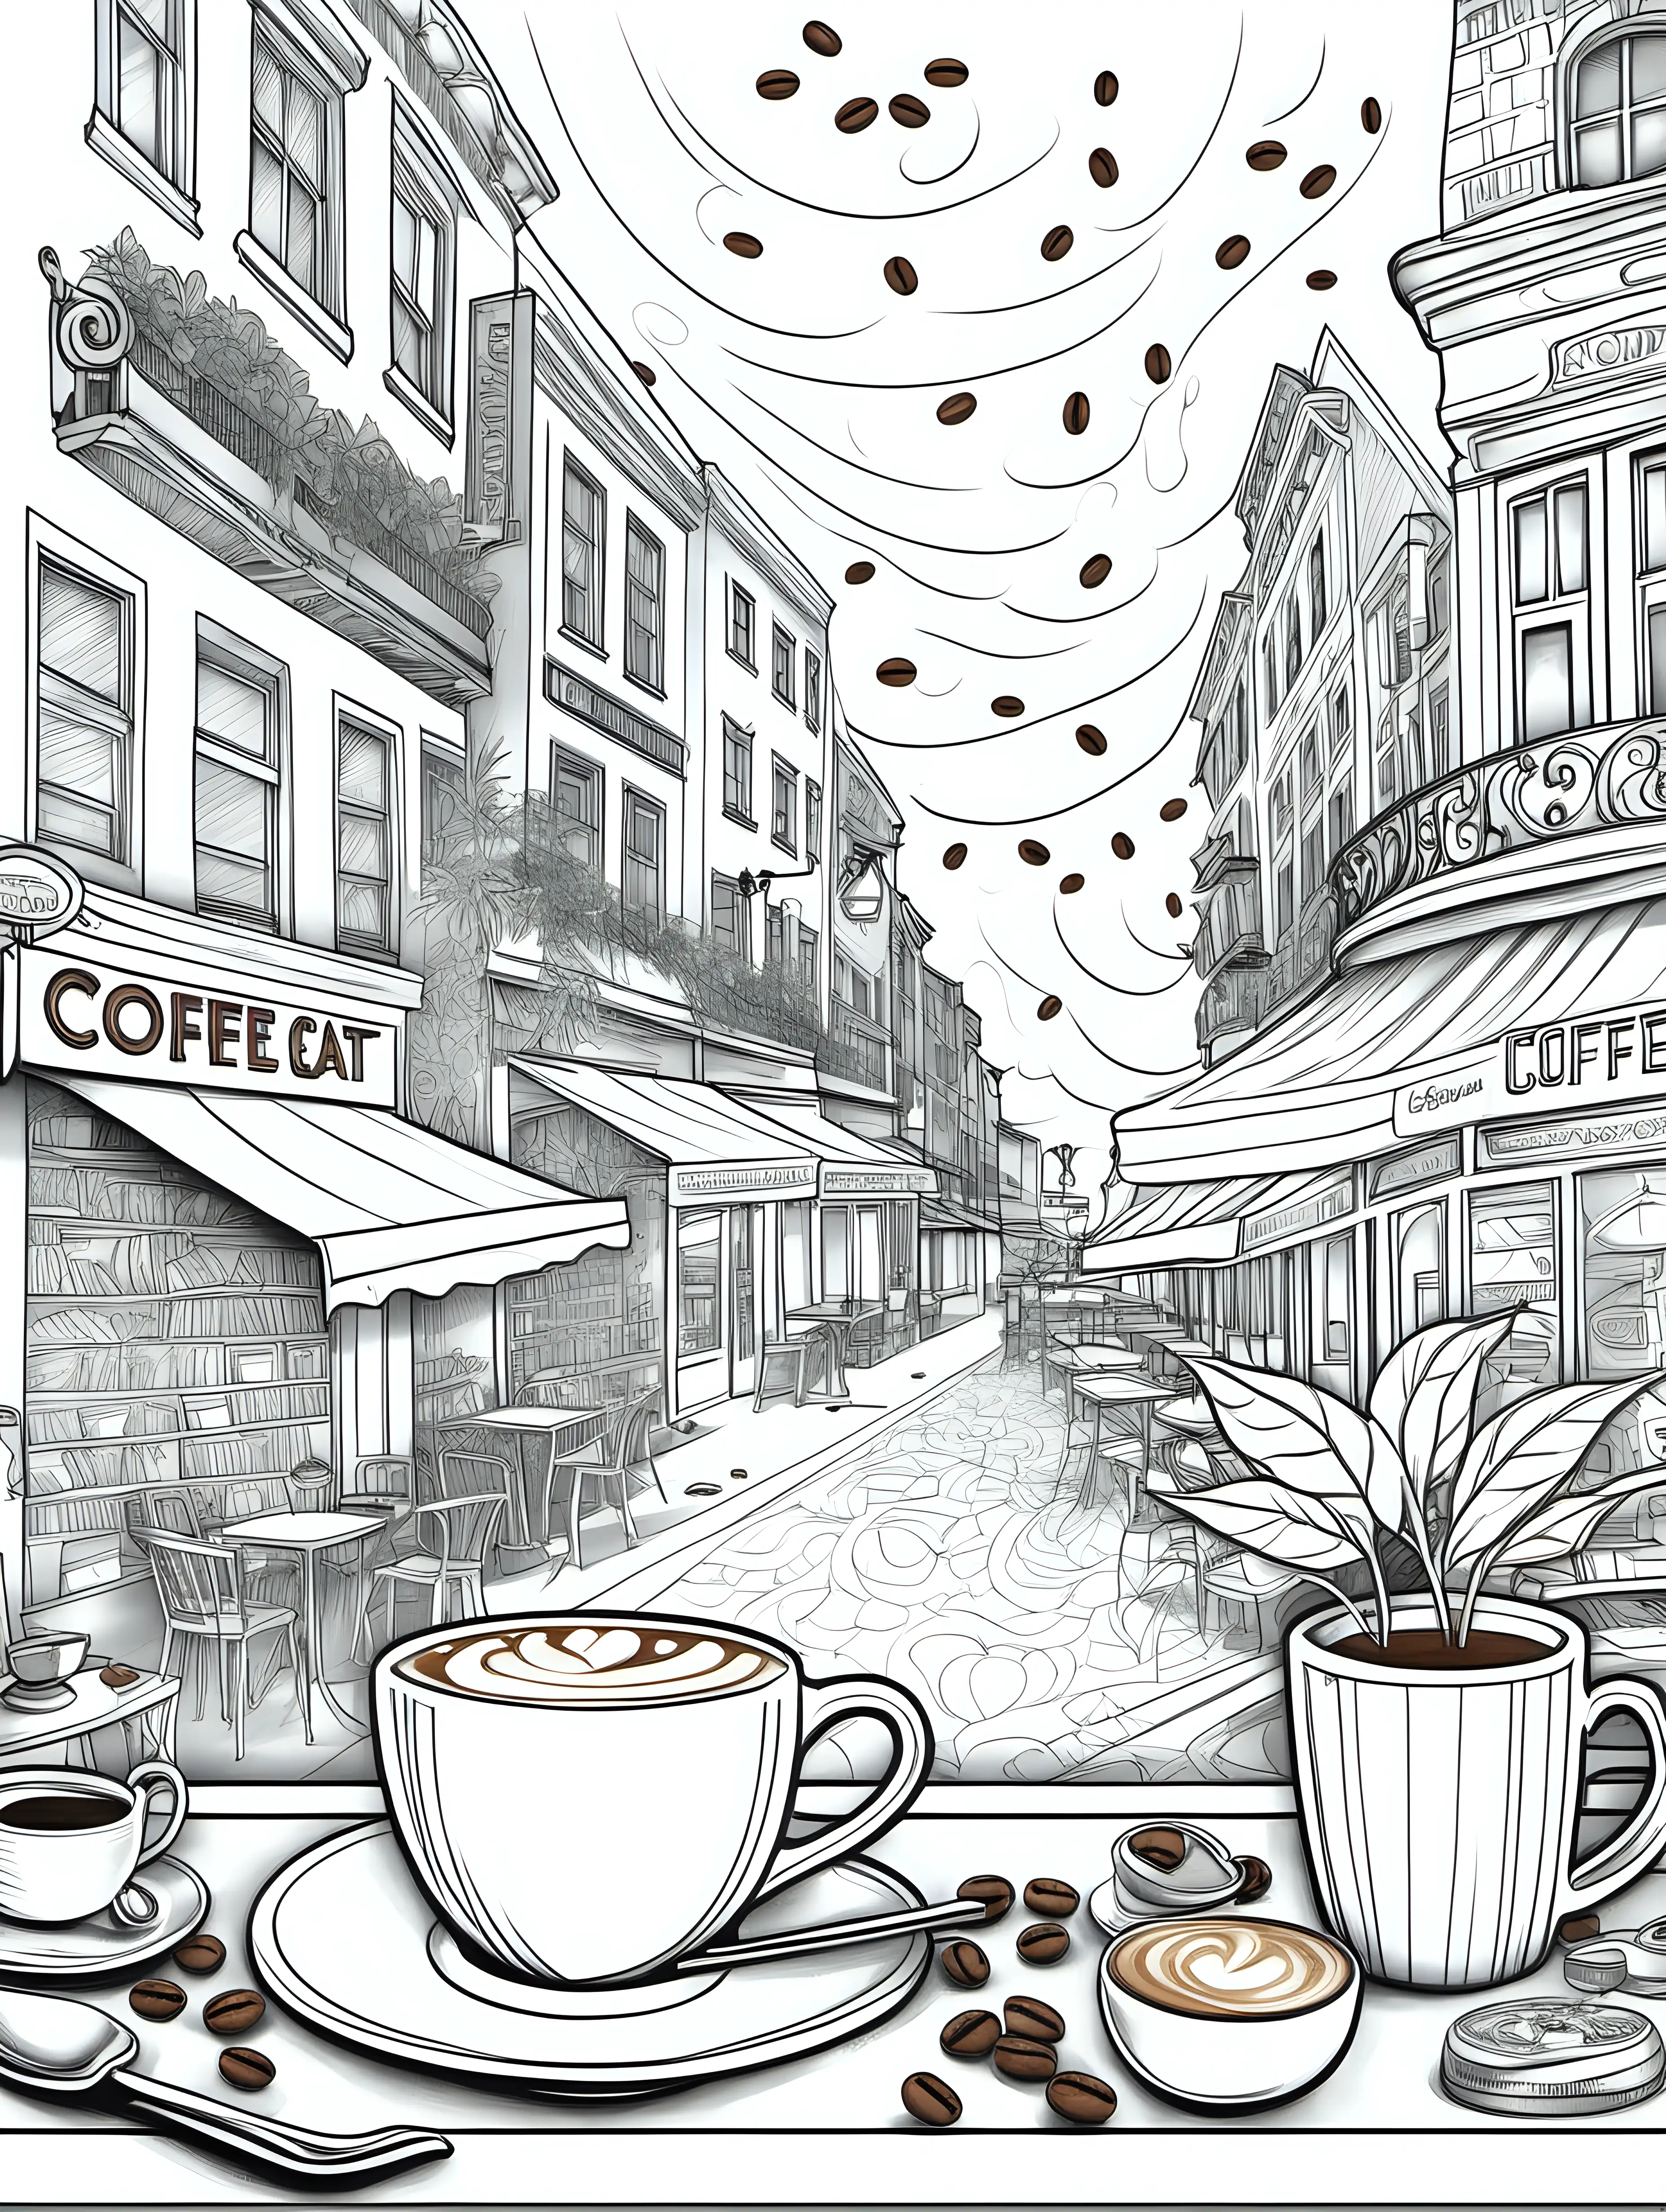 Coffee Culture Coloring Cozy Scenes and Artistic Espresso Delights